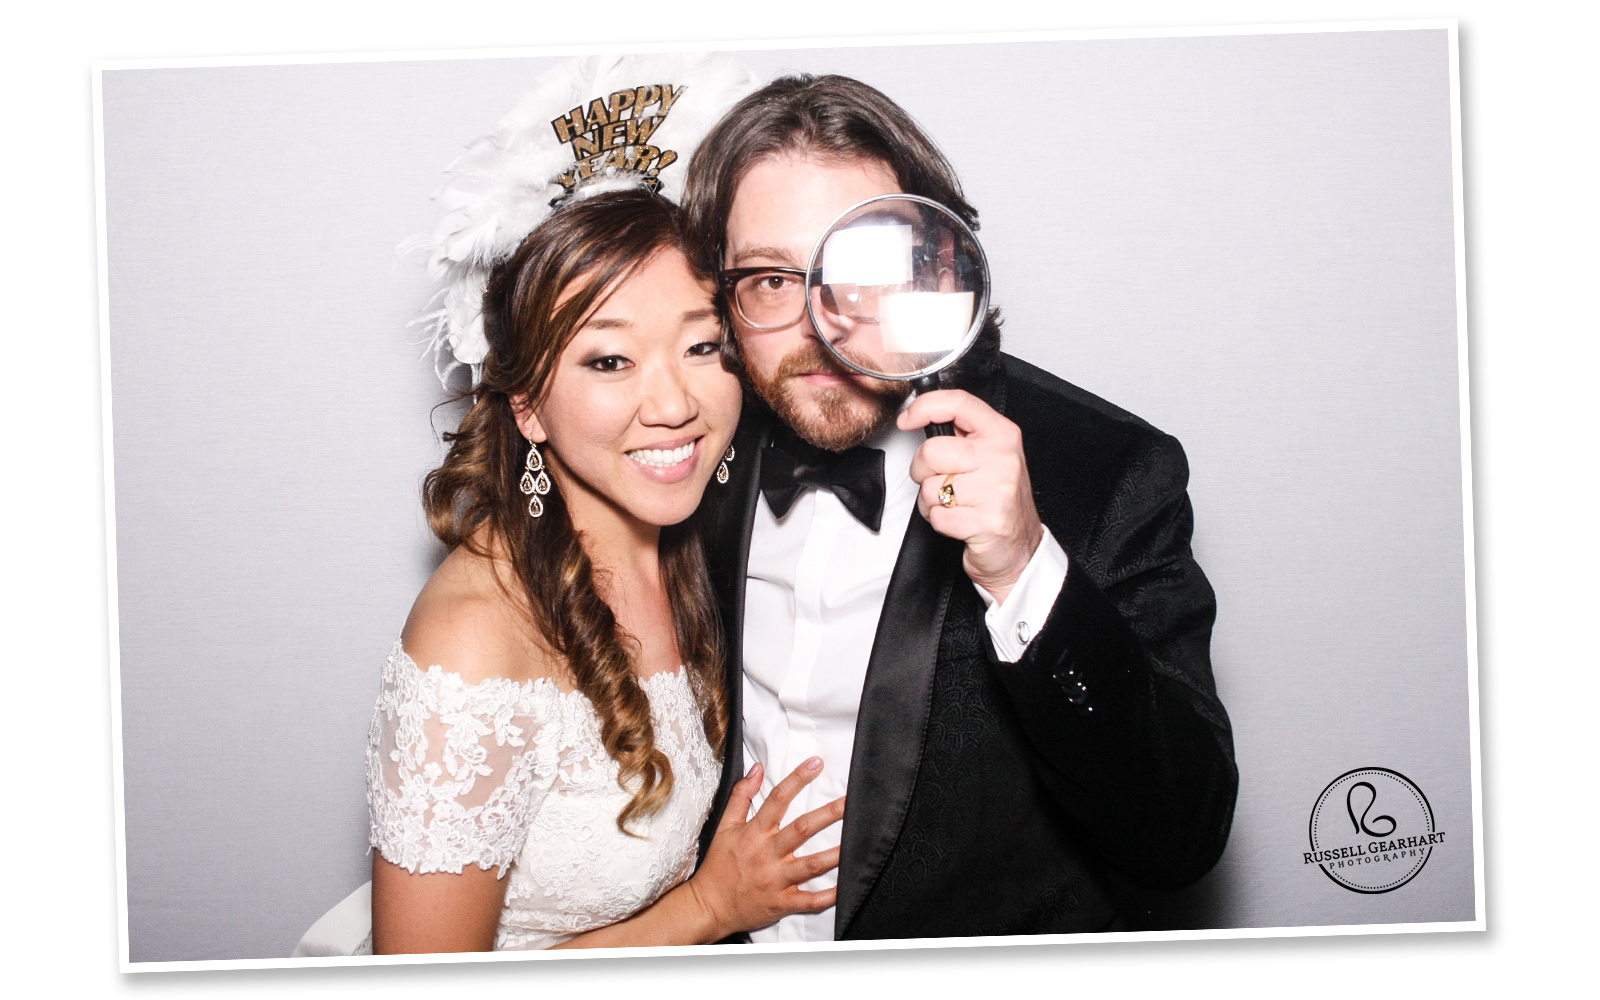 New Year’s Eve Wedding Photobooth: Mina + Michael, Santa Monica, CA – Russell Gearhart Photography – www.gearhartphoto.com